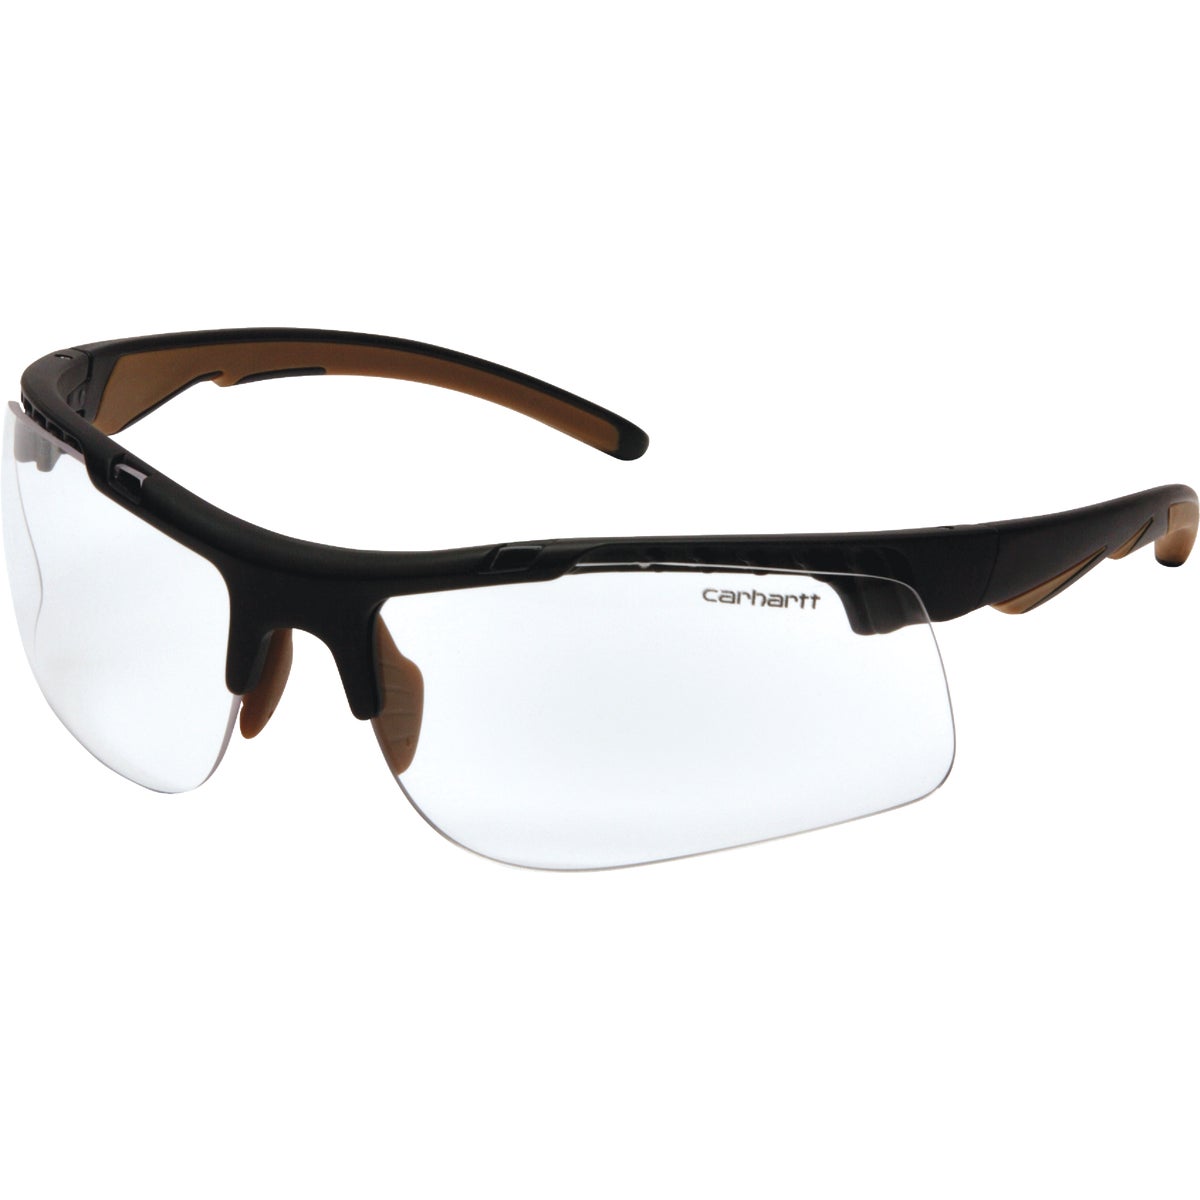 Carhartt Rockwood Black Frame Safety Glasses with Clear Anti-Fog Lenses